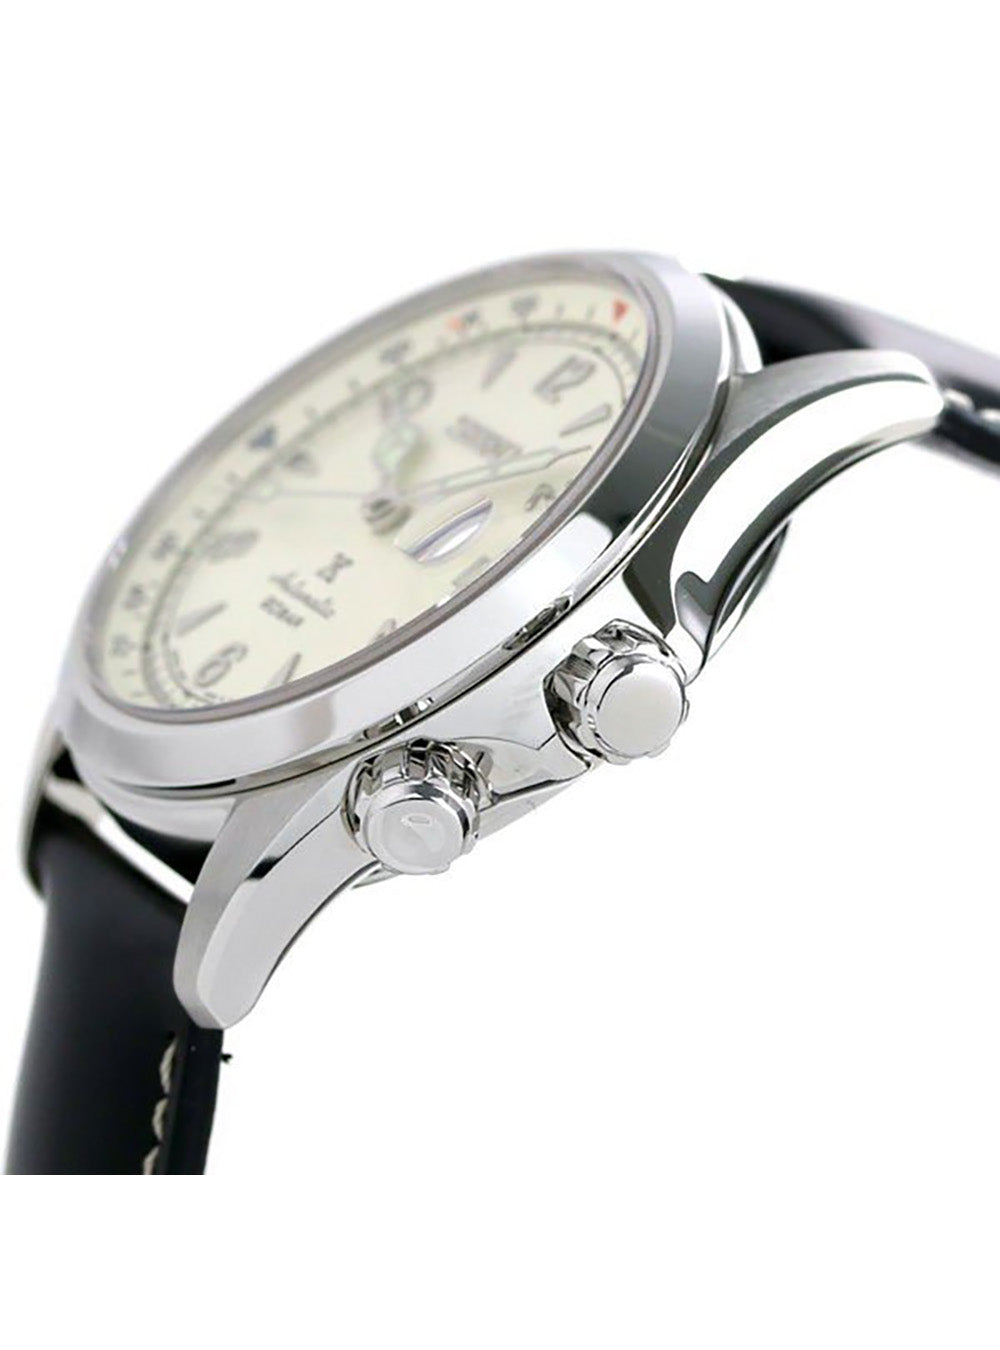 [wristwatches] - japan-select